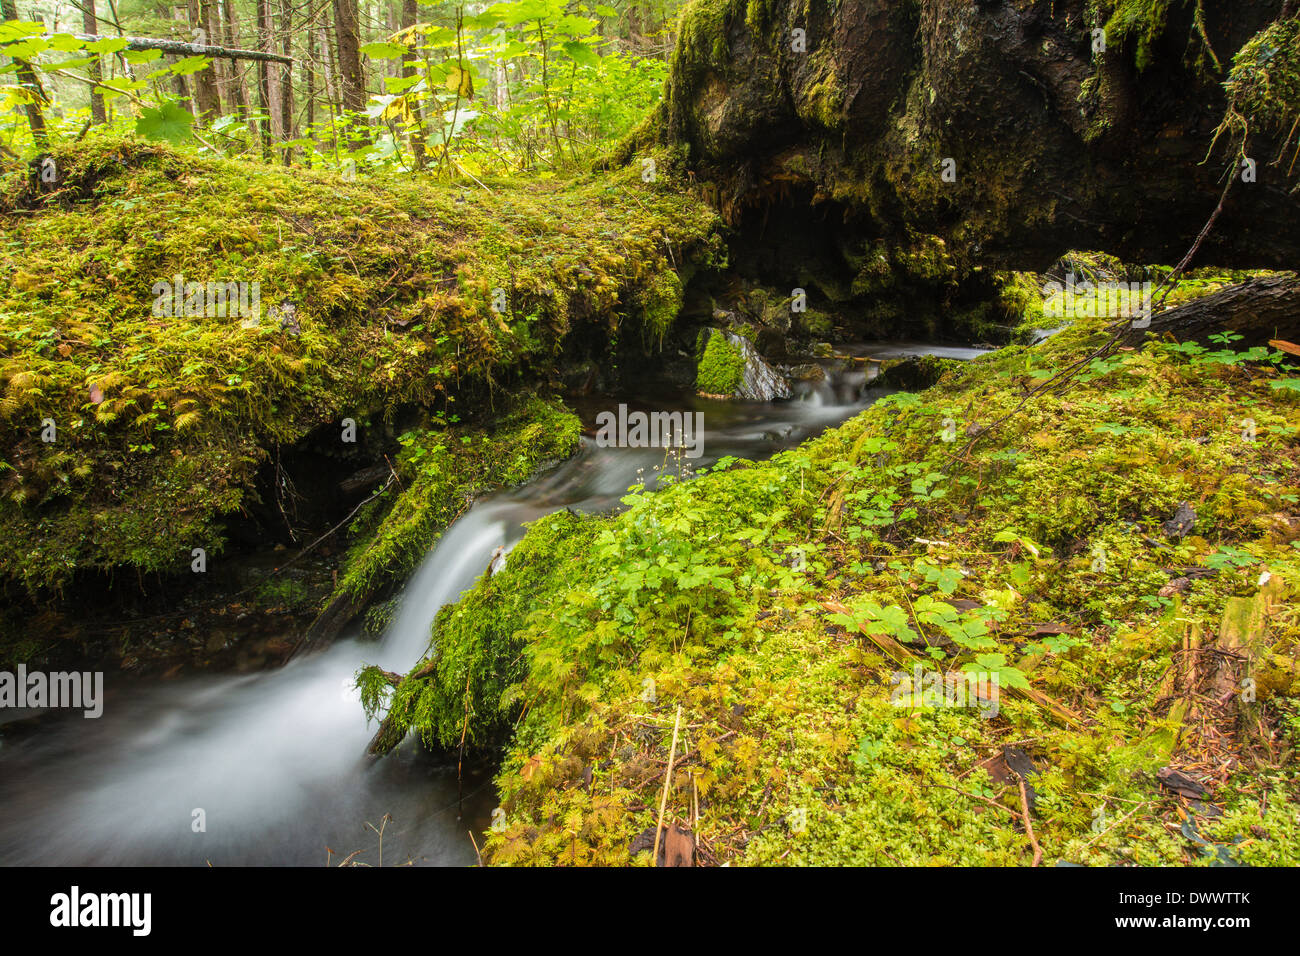 Strom fließt durch den gemäßigten Regen Wald der Tongass National Forest, Baranof Island, Alaska, USA Stockfoto